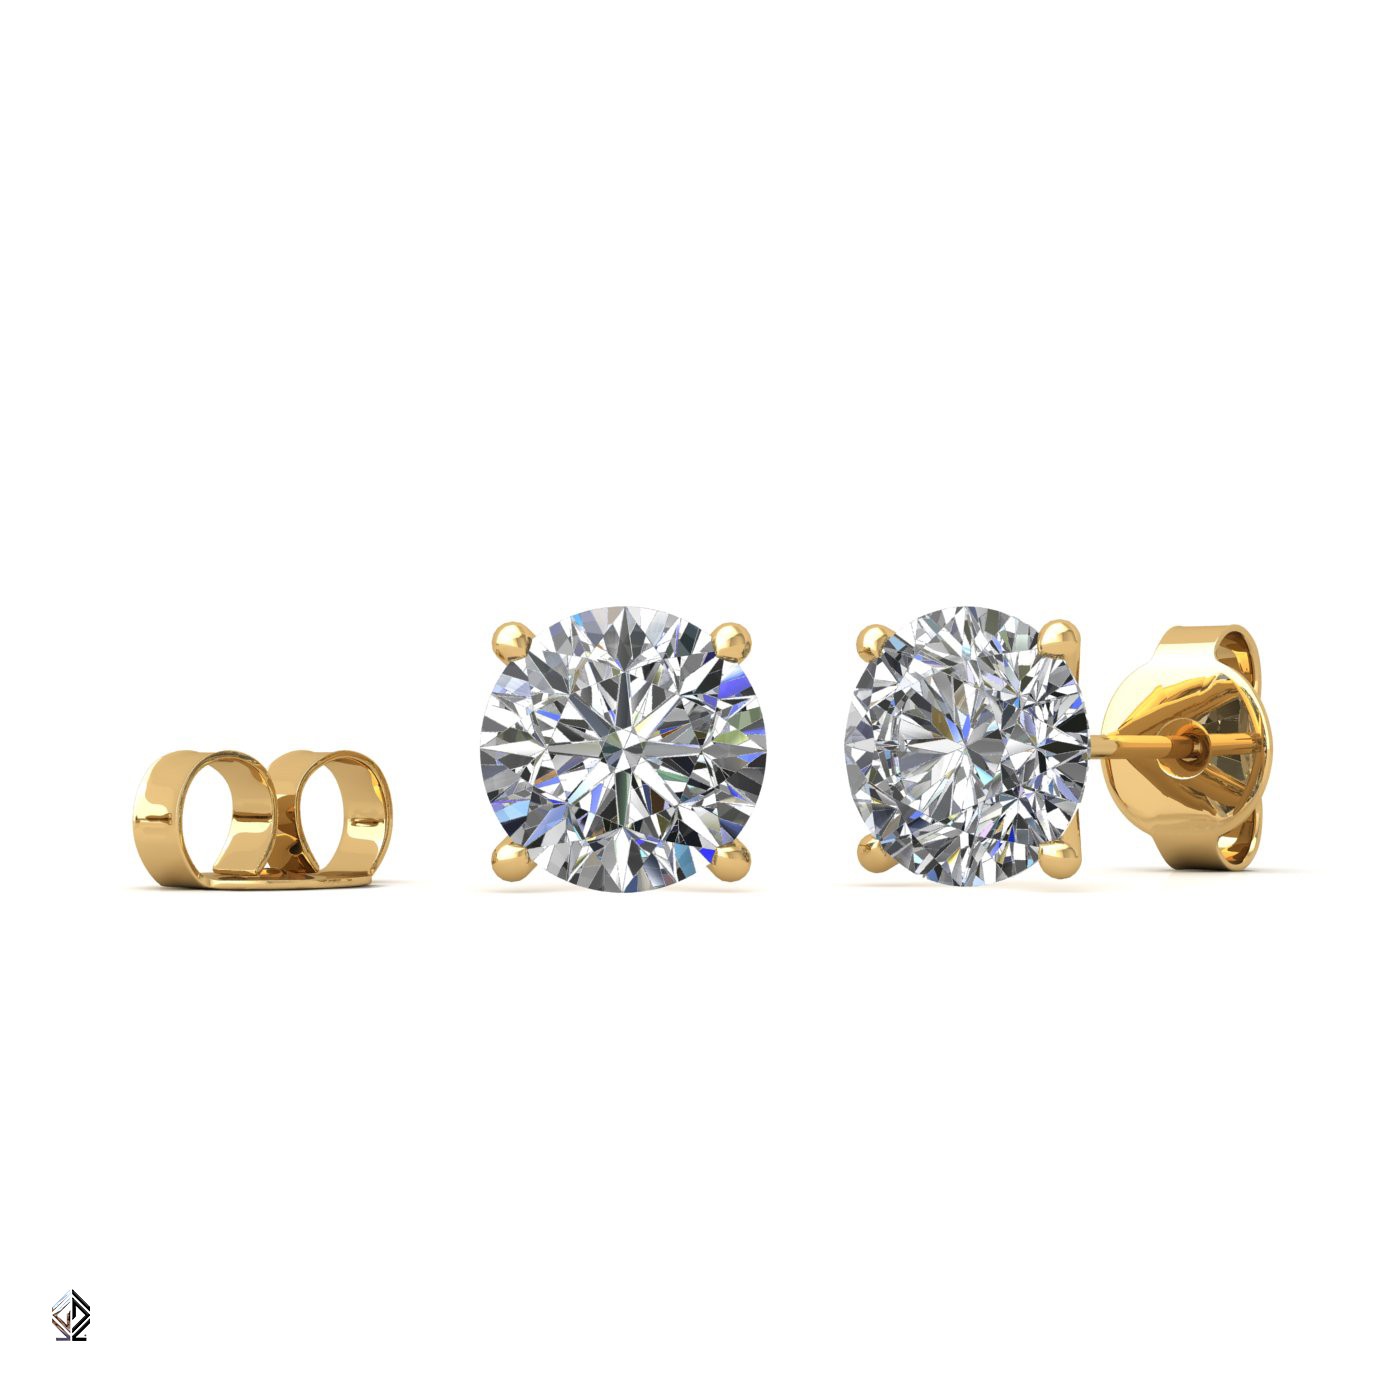 18k yellow gold 0,7 ct each (1,4 tcw) 4 prongs round cut classic diamond earring studs